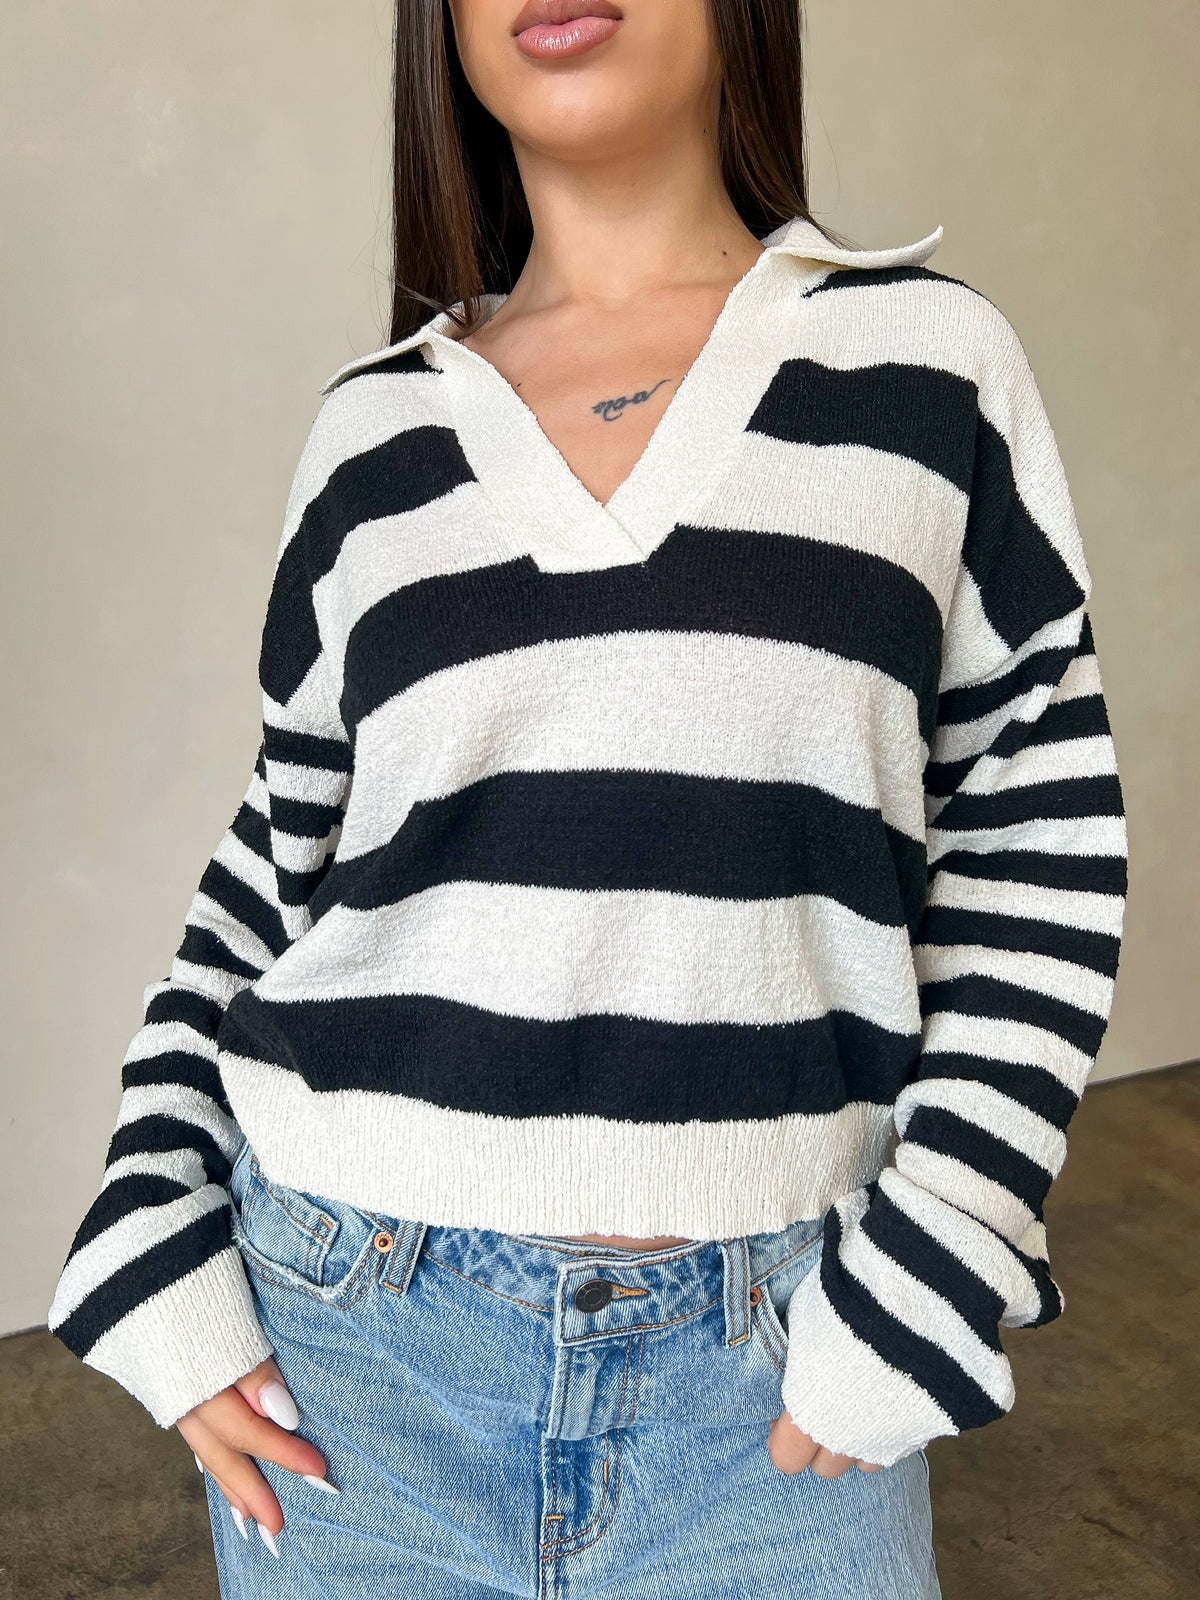 Celina Stripped Sweater (Black/Cream)